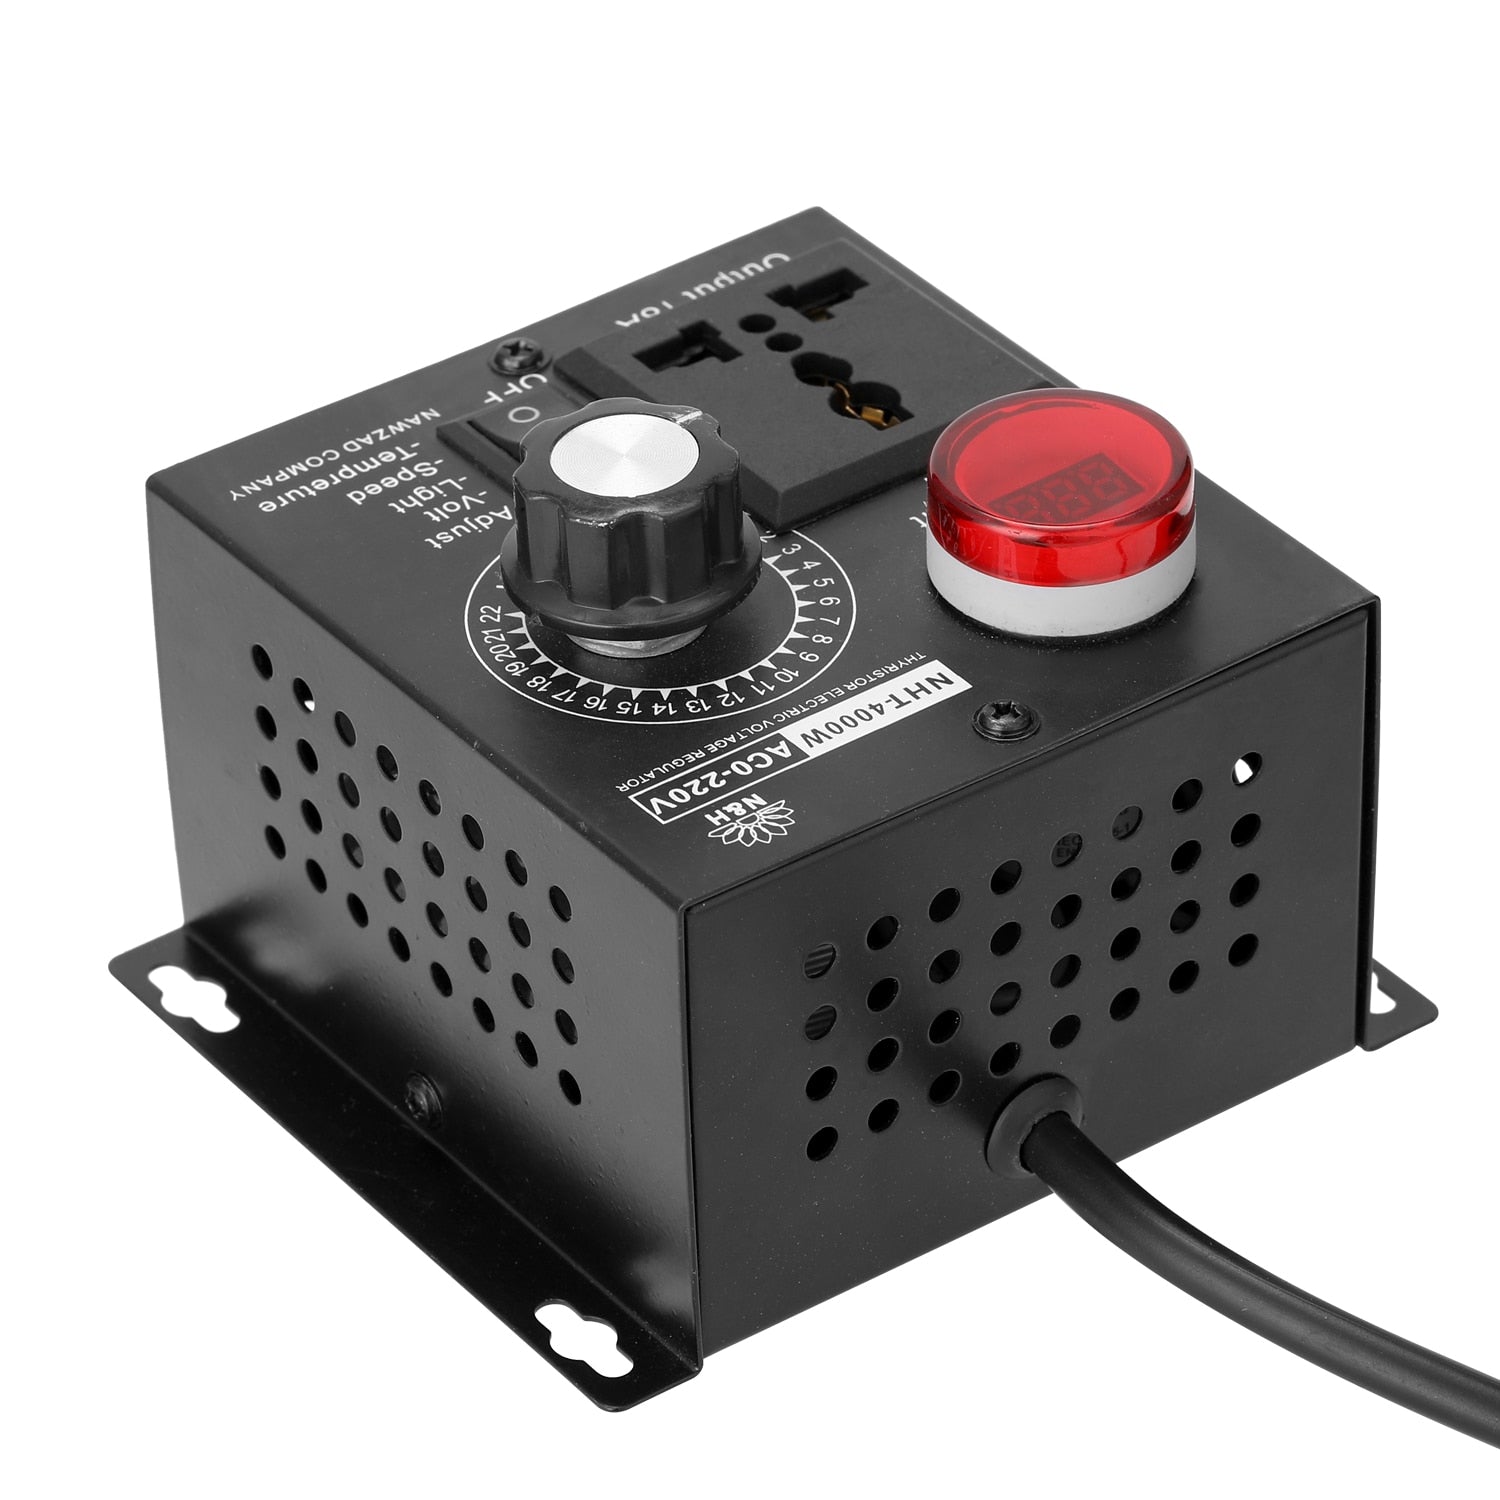 220V 4000W Compact Variable Voltage Regulator Controller